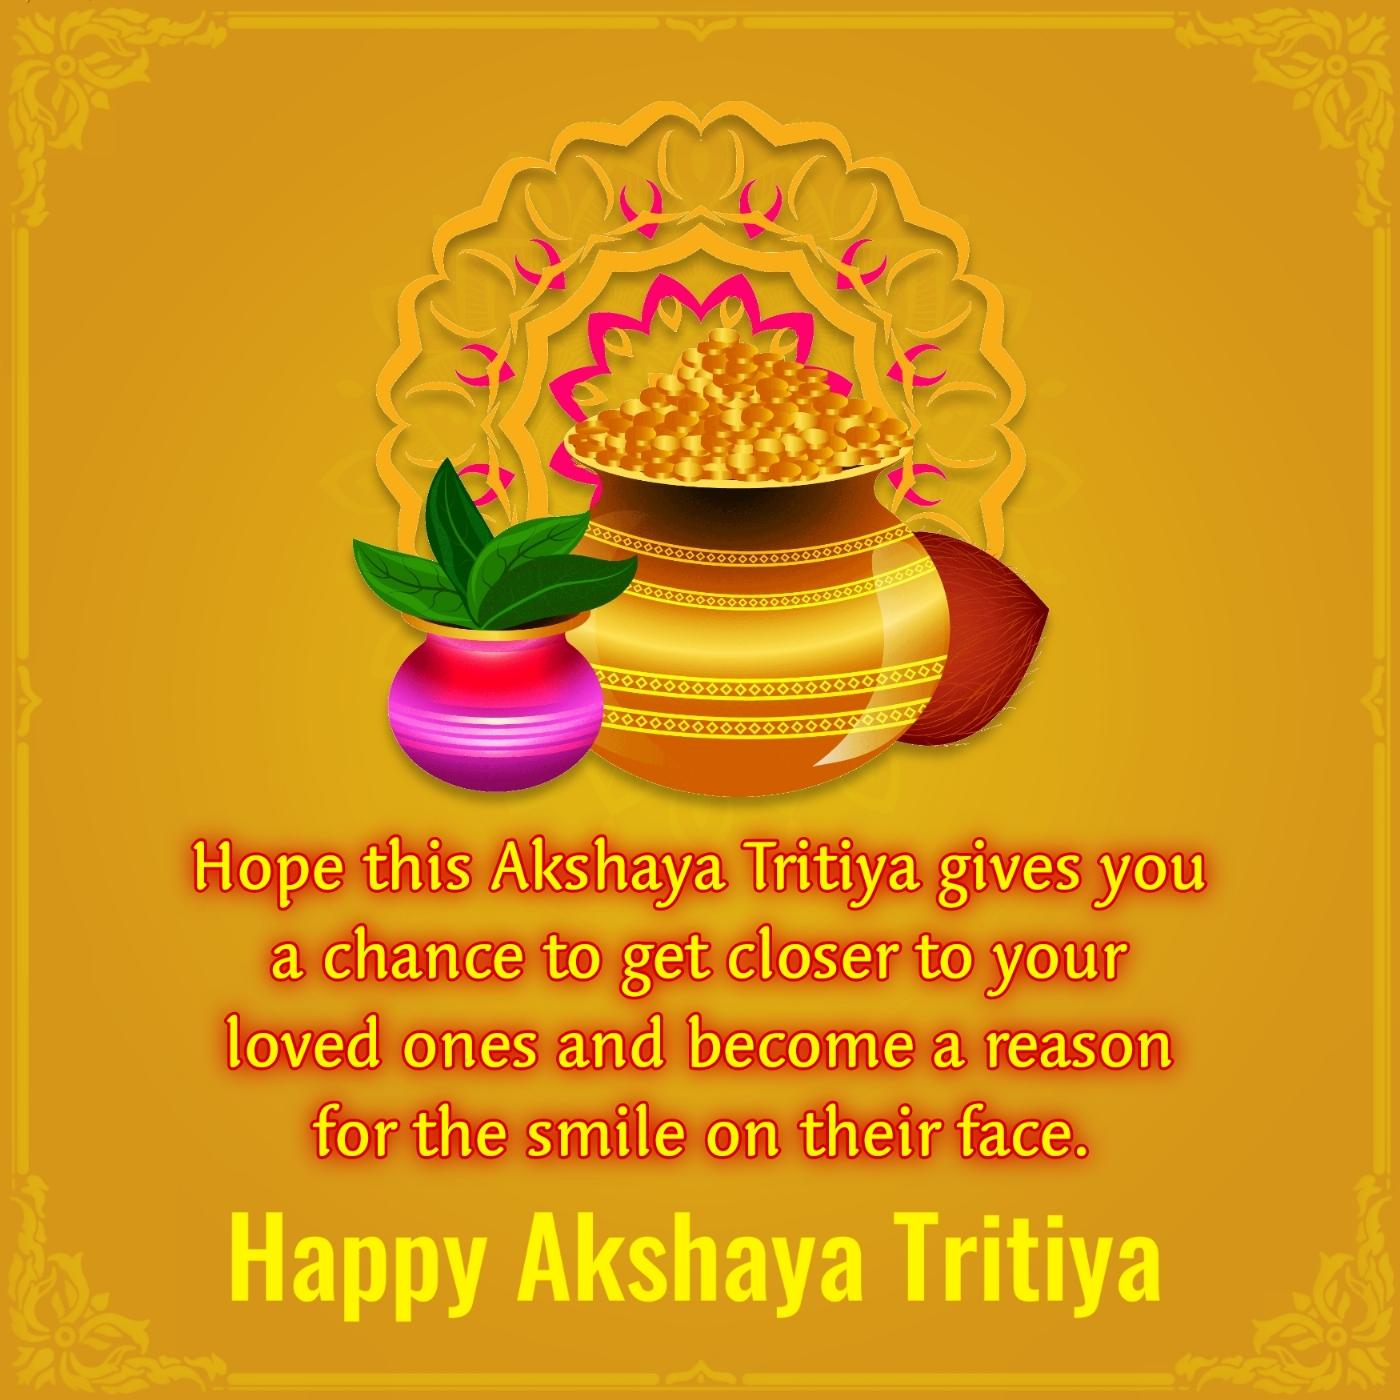 Hope this Akshaya Tritiya gives you a chance to get closer